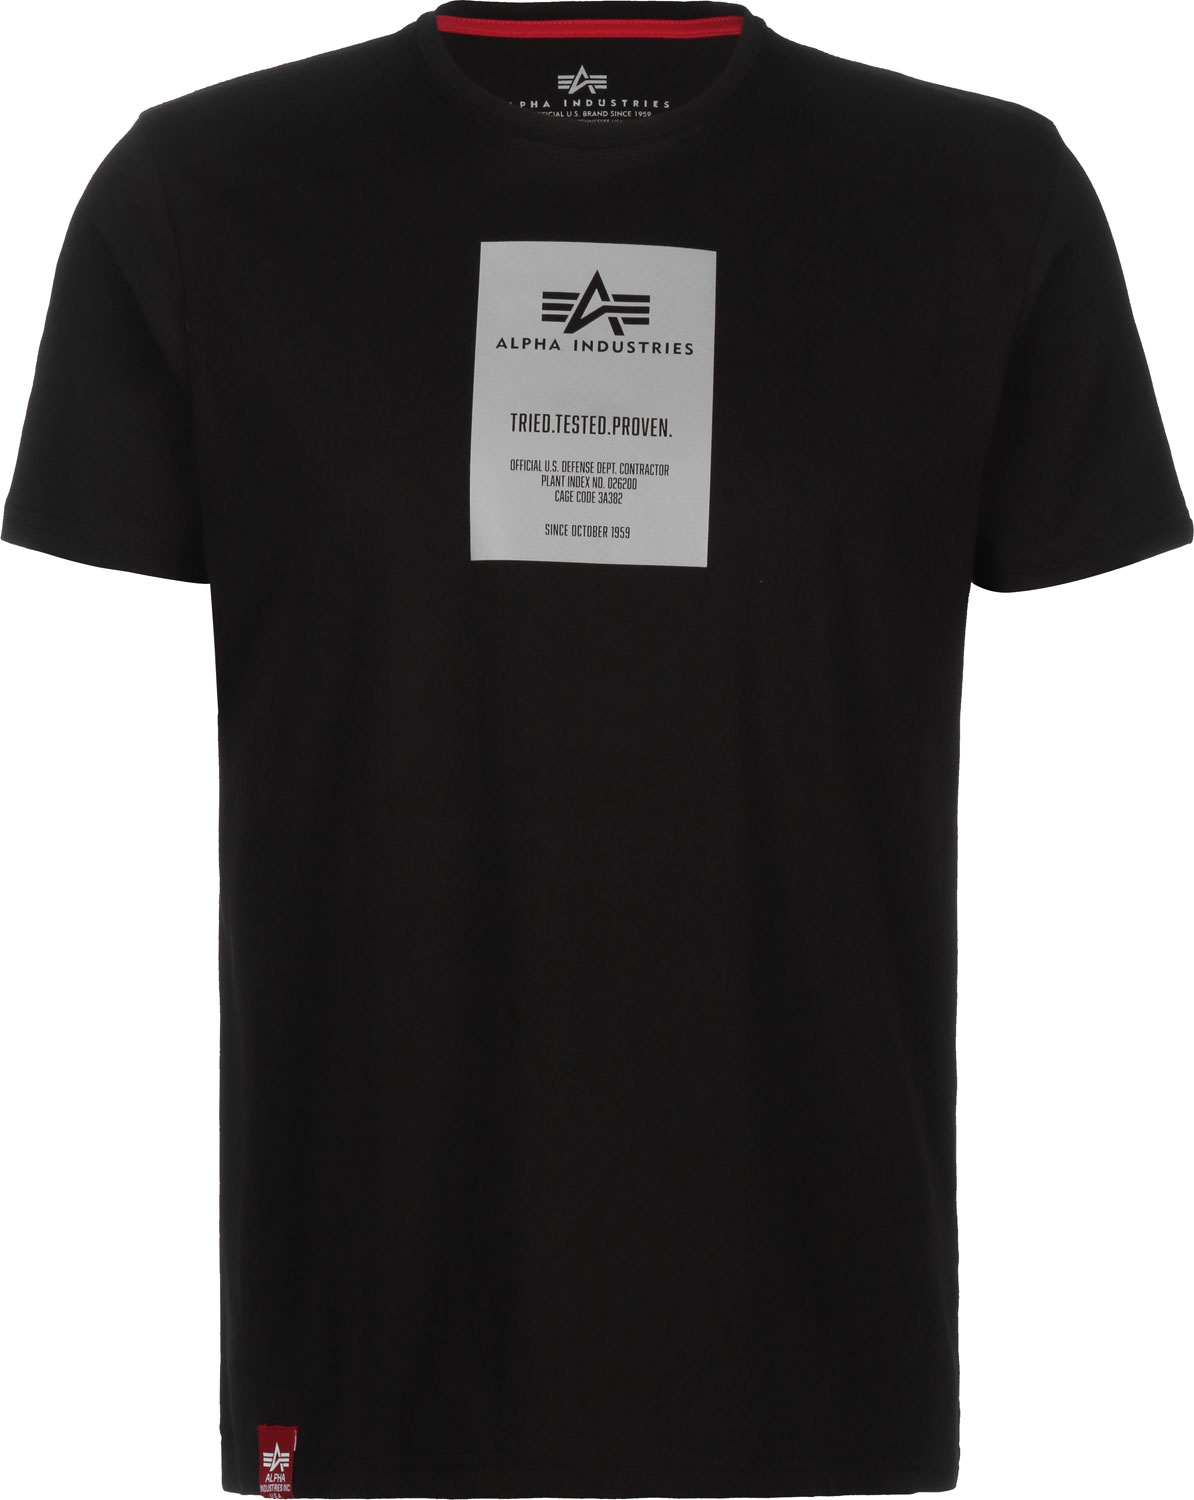 Alpha Industries Reflective Label (126515/09) 515 T-Shirt - The Black 